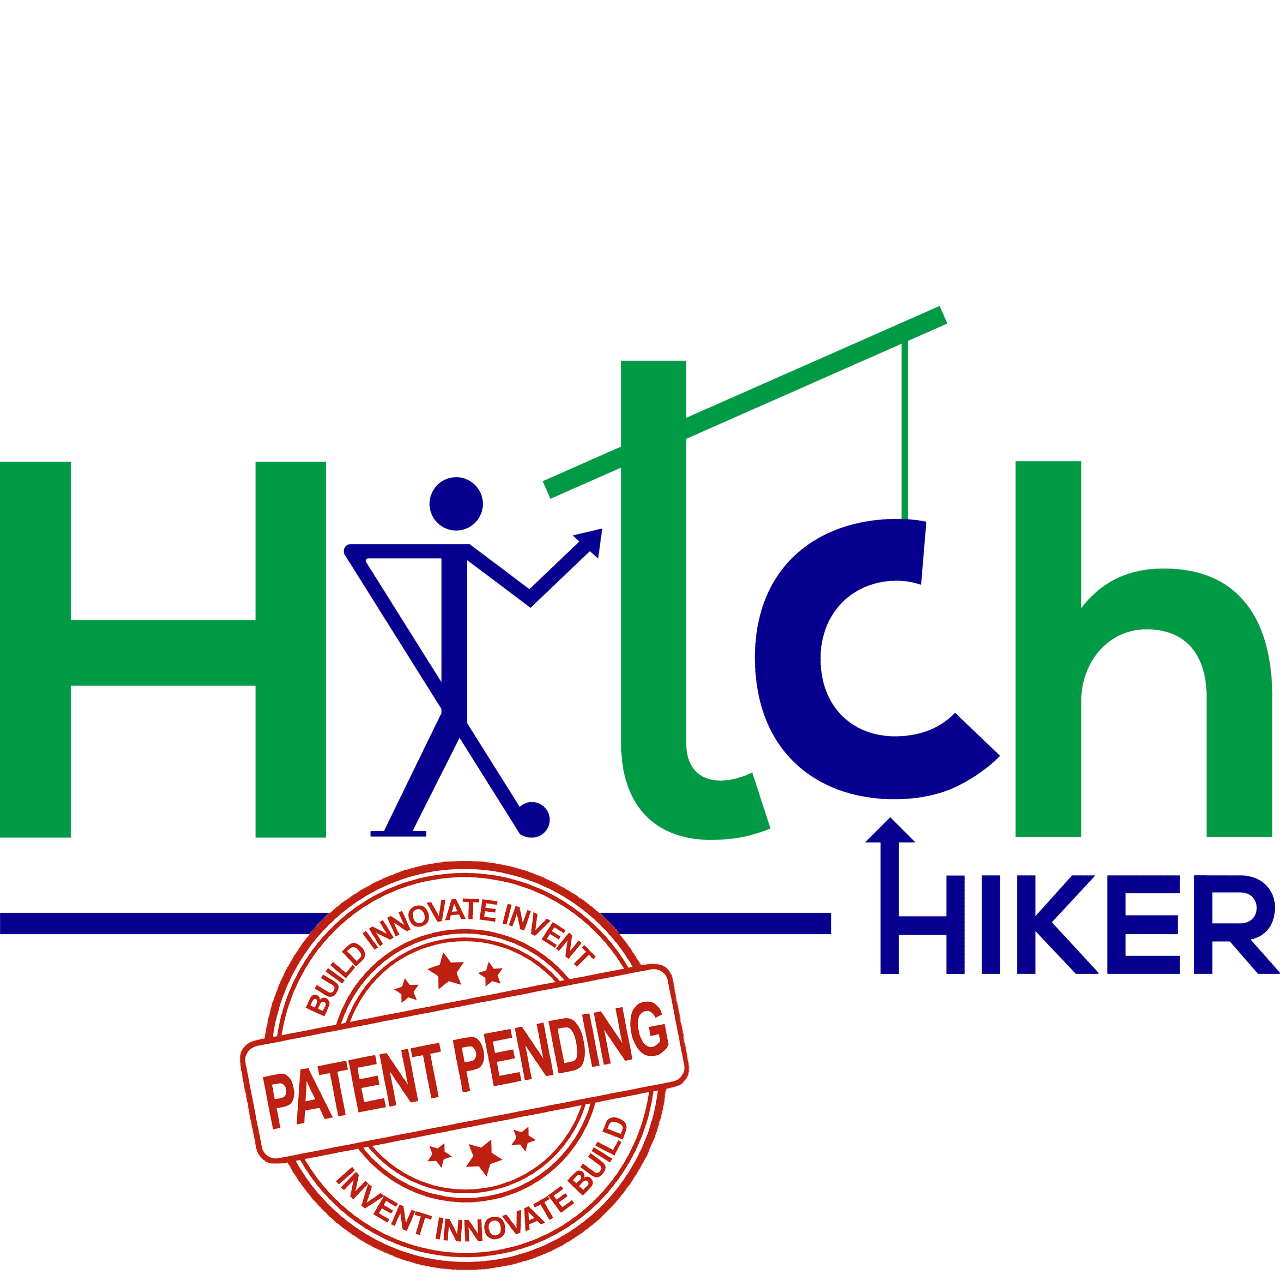 HitchHiker, LLC